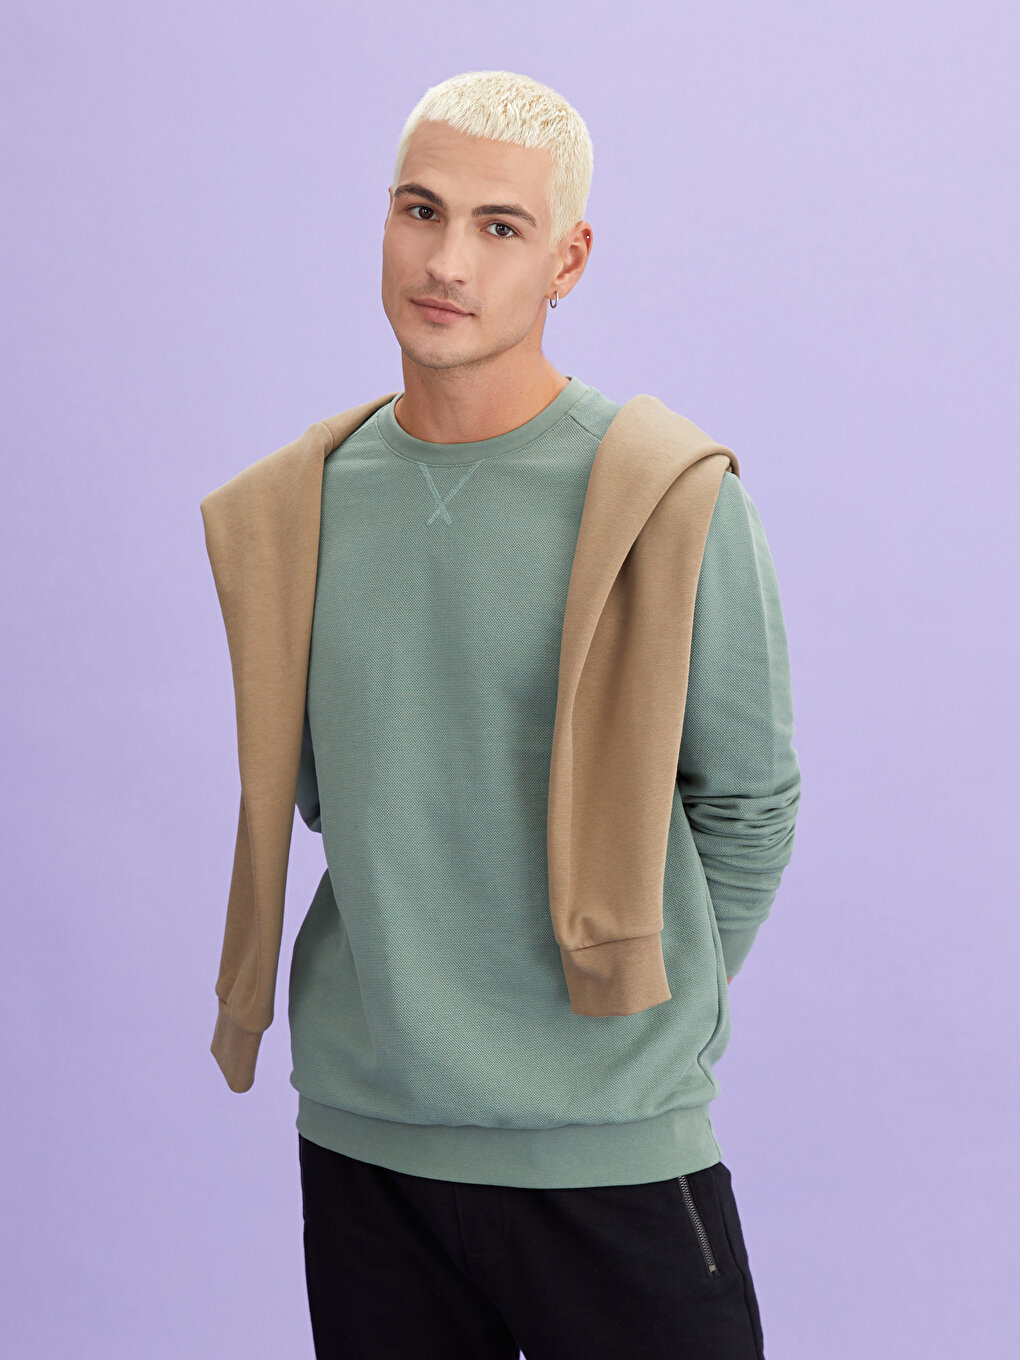 Oversized Men's Sleeveless Pullover Sweatshirt / Crew Neck